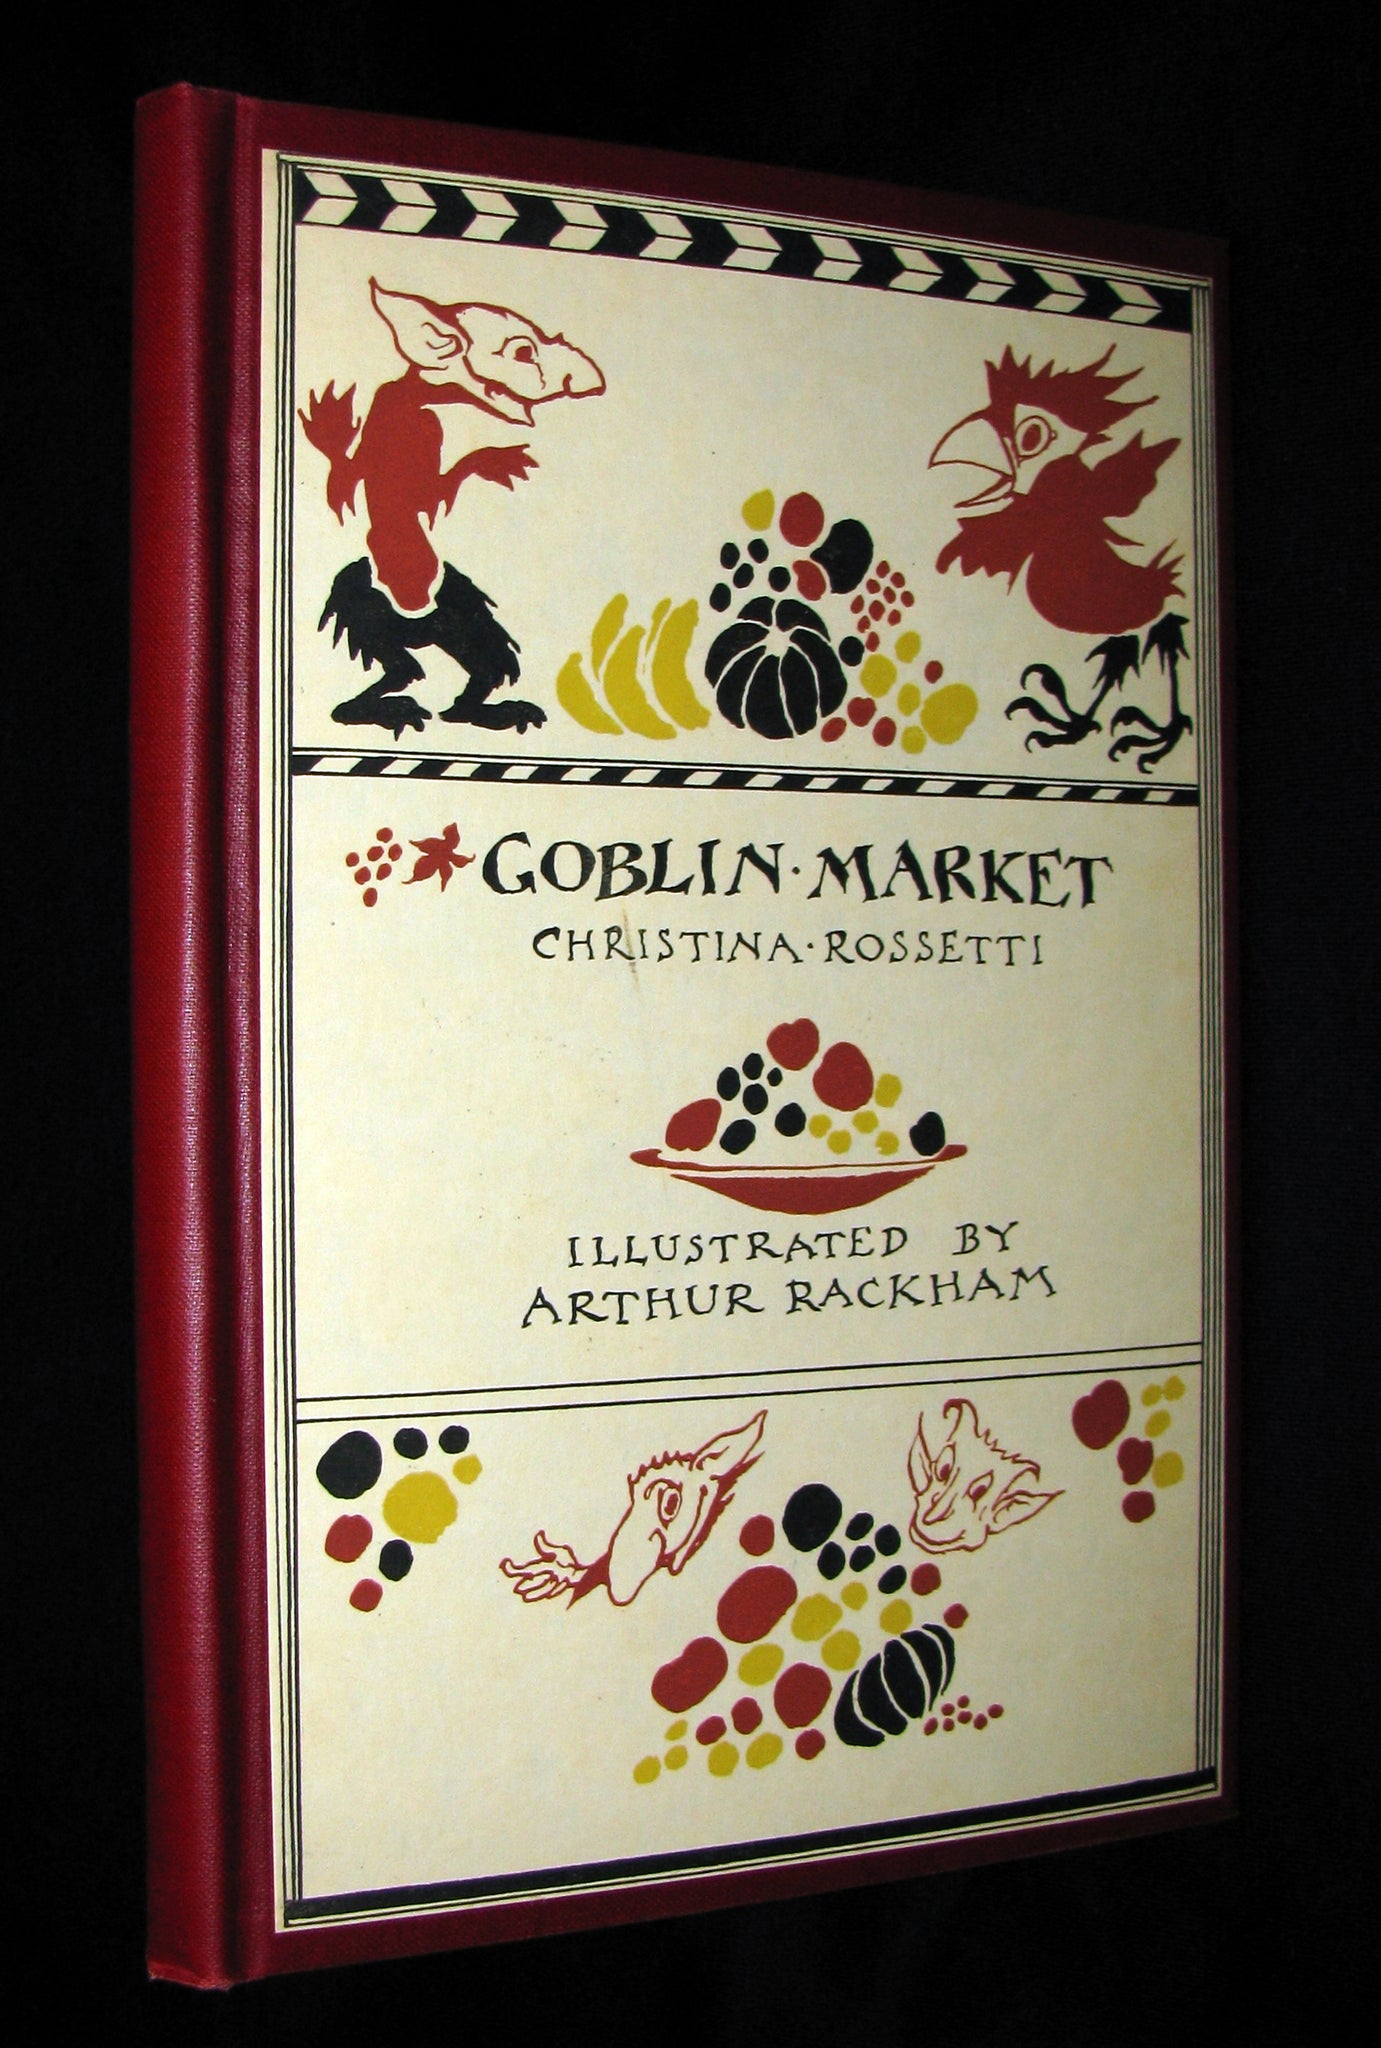 1933 1st American Edition - Goblin Market by Christina Rossetti illustrated by Arthur Rackham